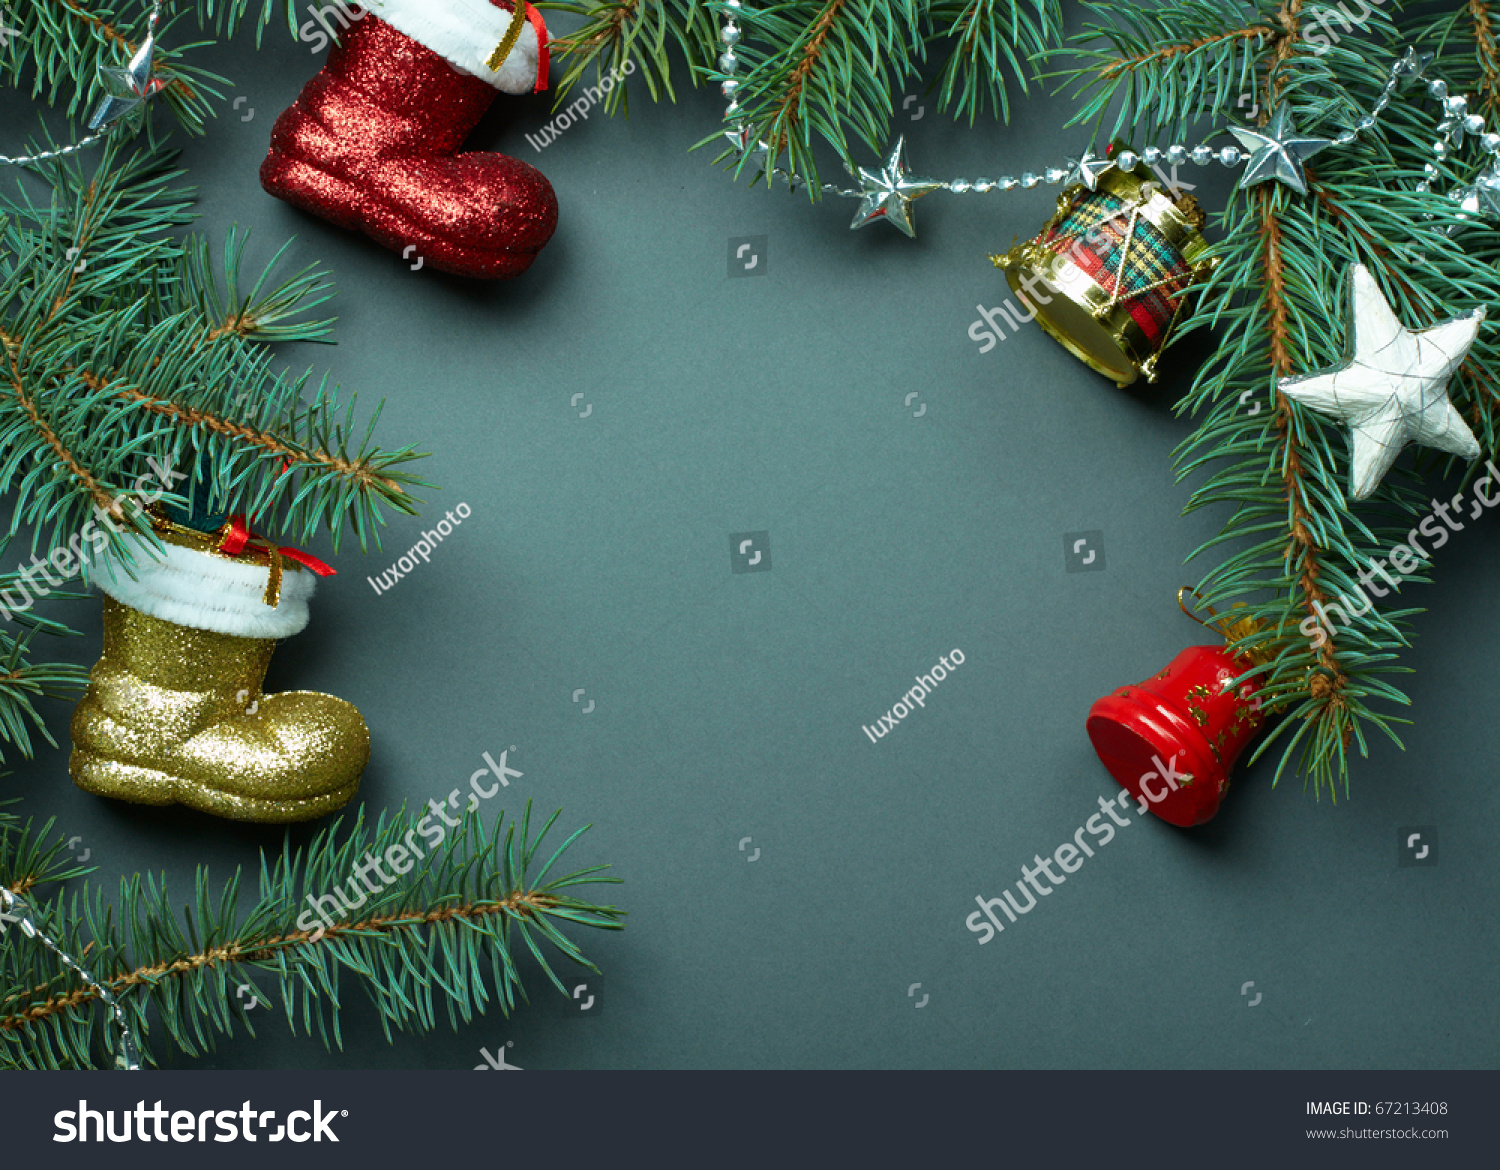 Decoration Stock Photo 67213408 : Shutterstock